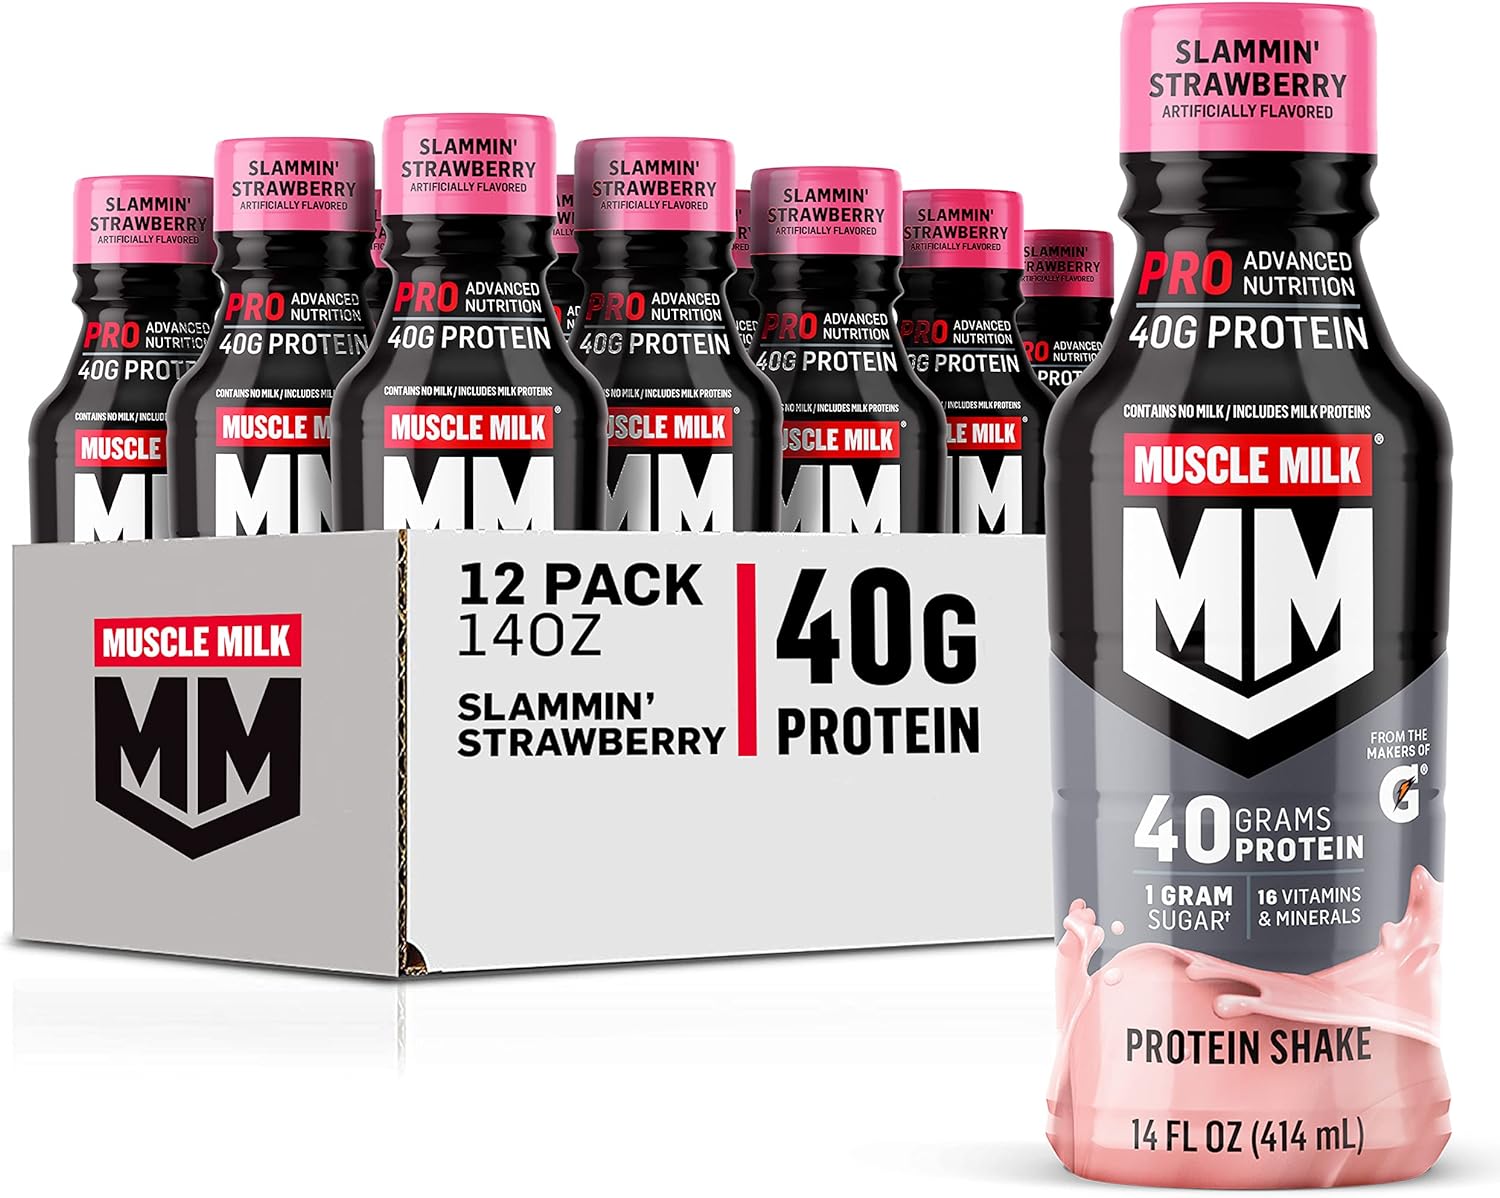 Muscle Milk Pro Series Protein Shake, Slammin' Strawberry, 40g Protein 12 Pack